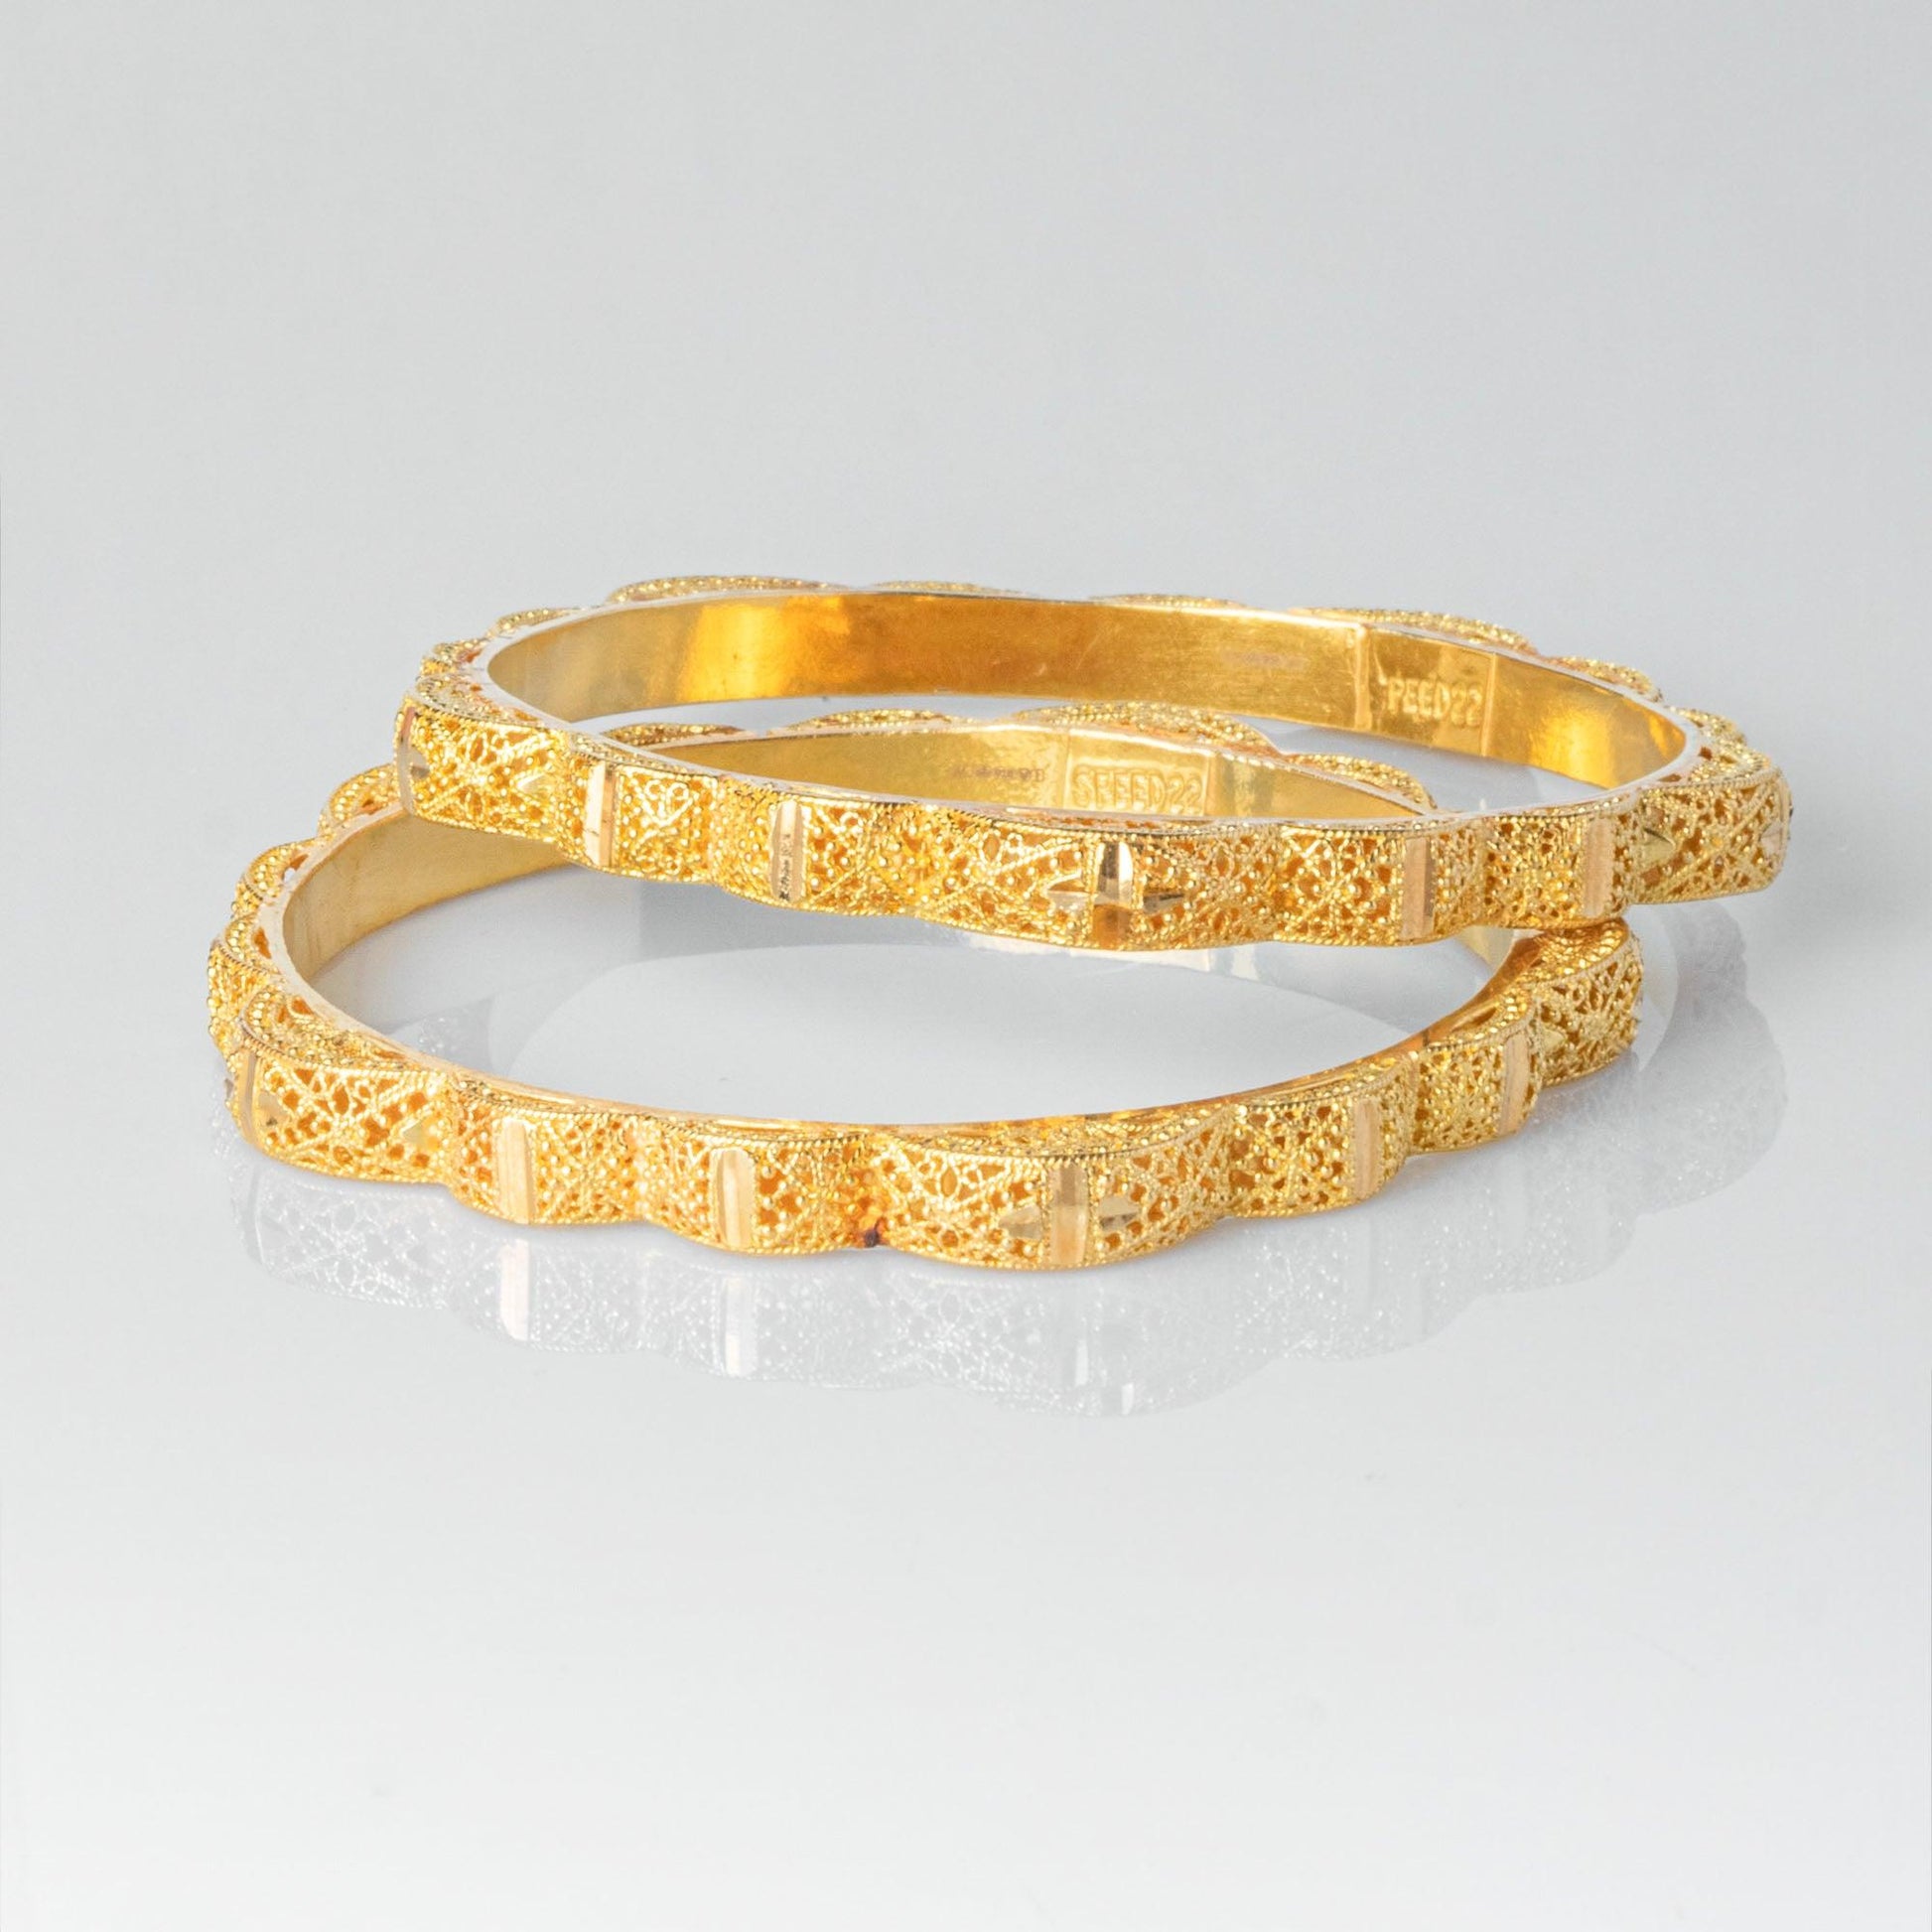 22ct Gold Bangle with Diamond Cut Filigree Design B-1511 - Minar Jewellers